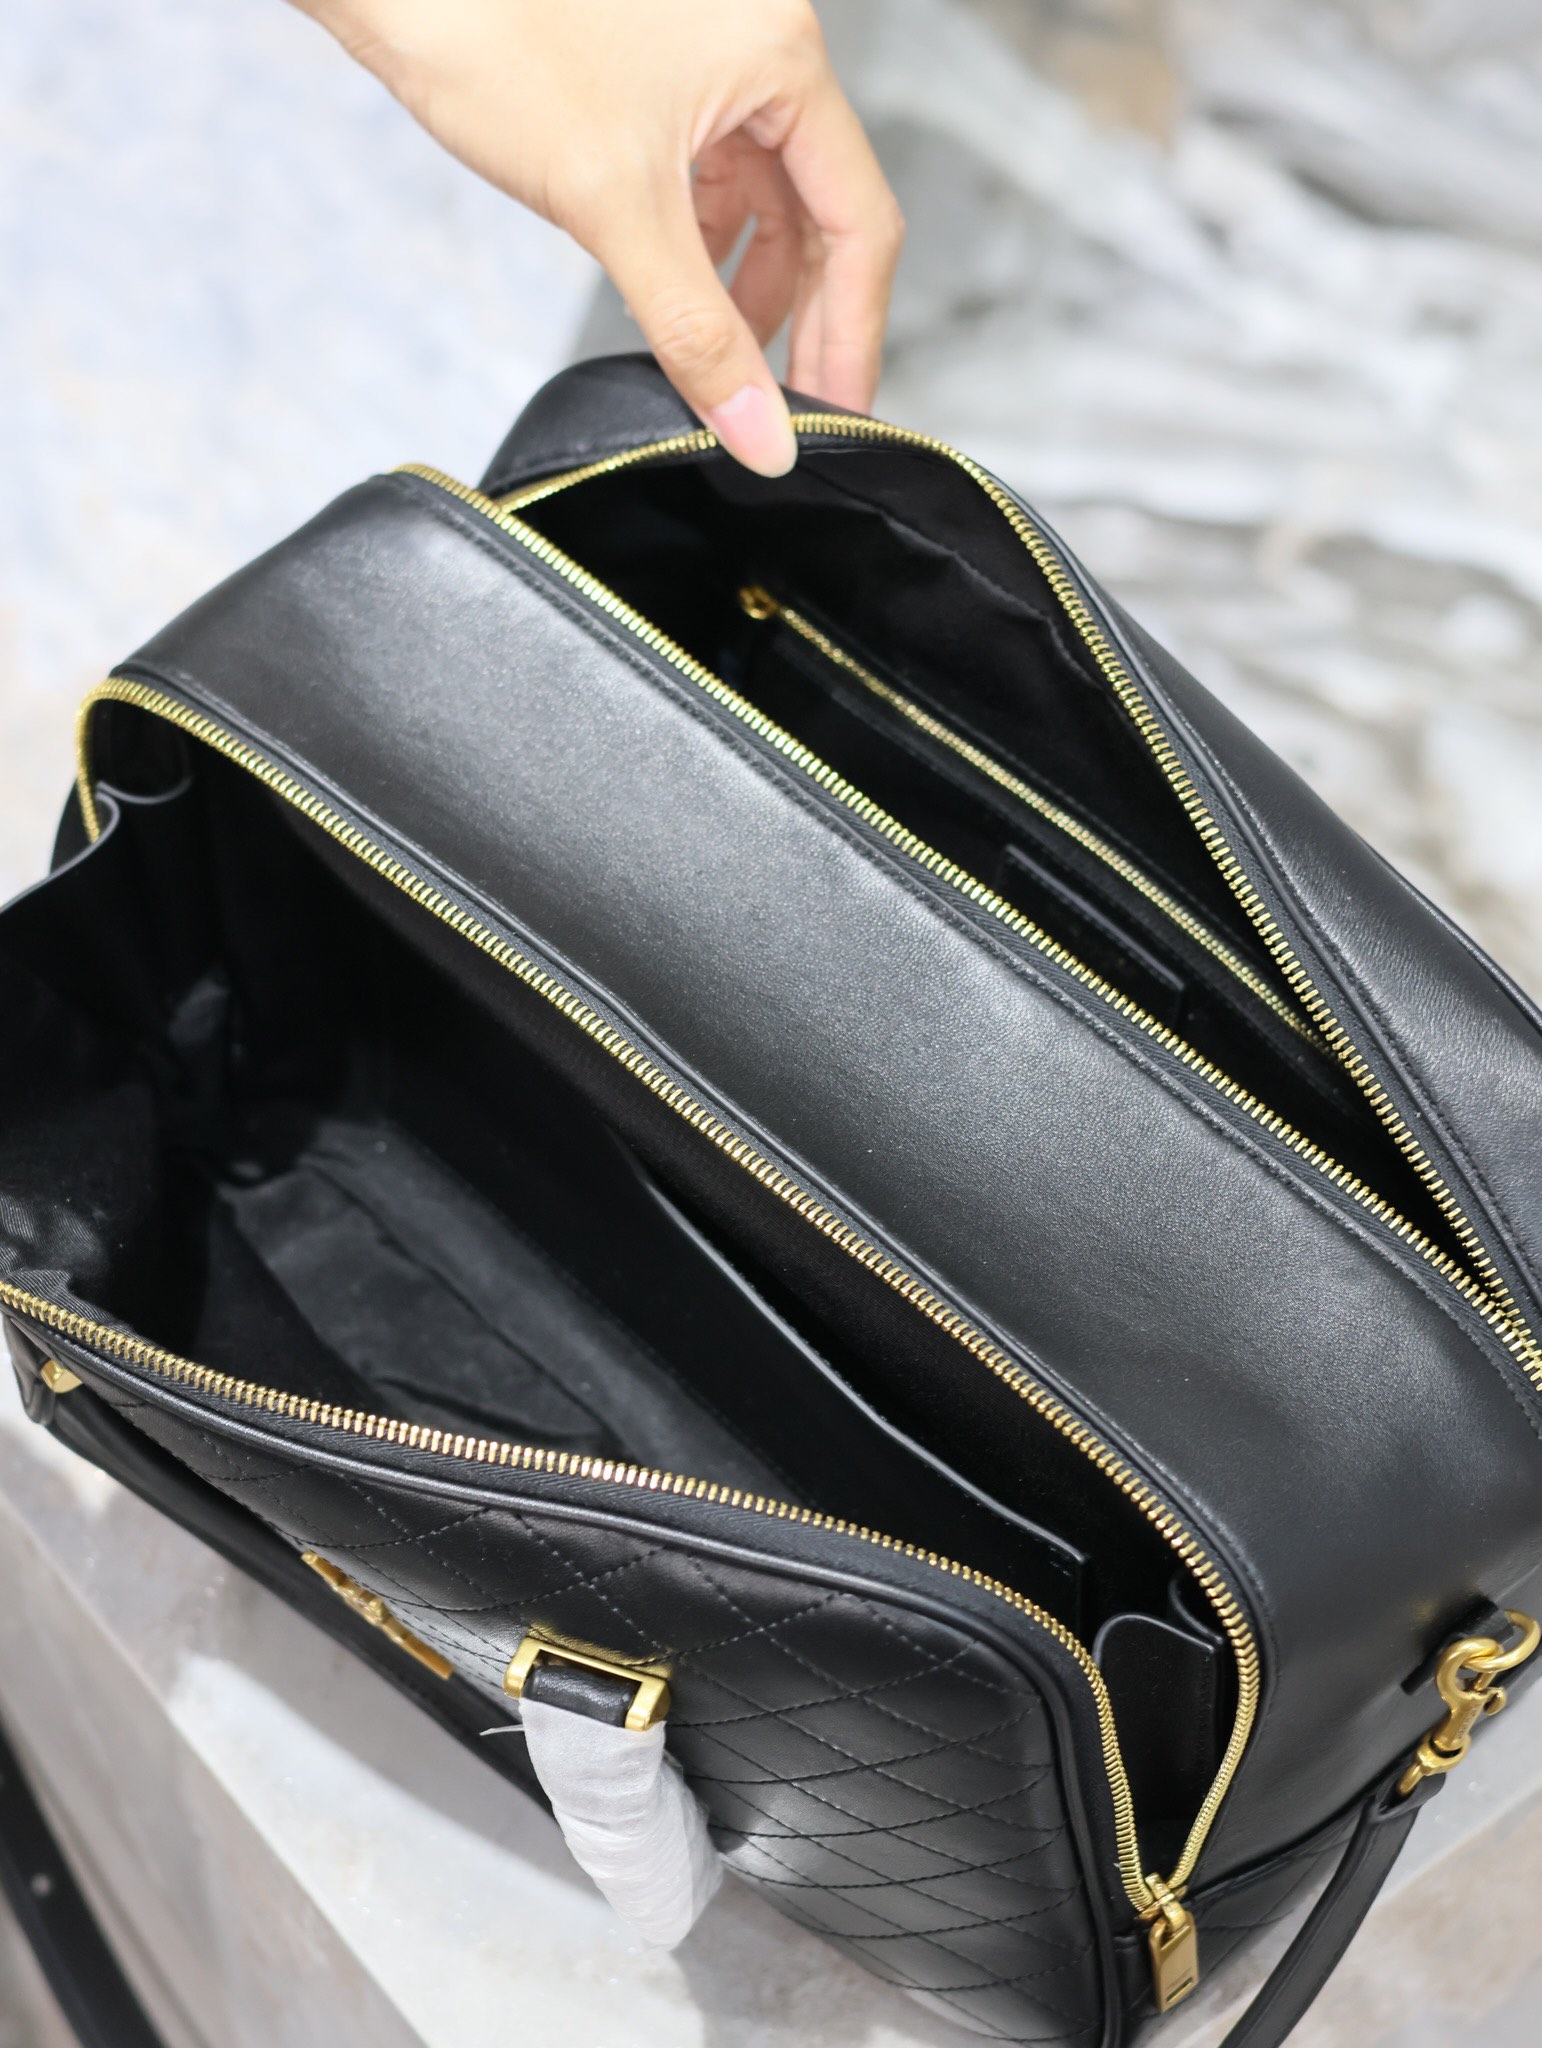 YSL Travel Bags